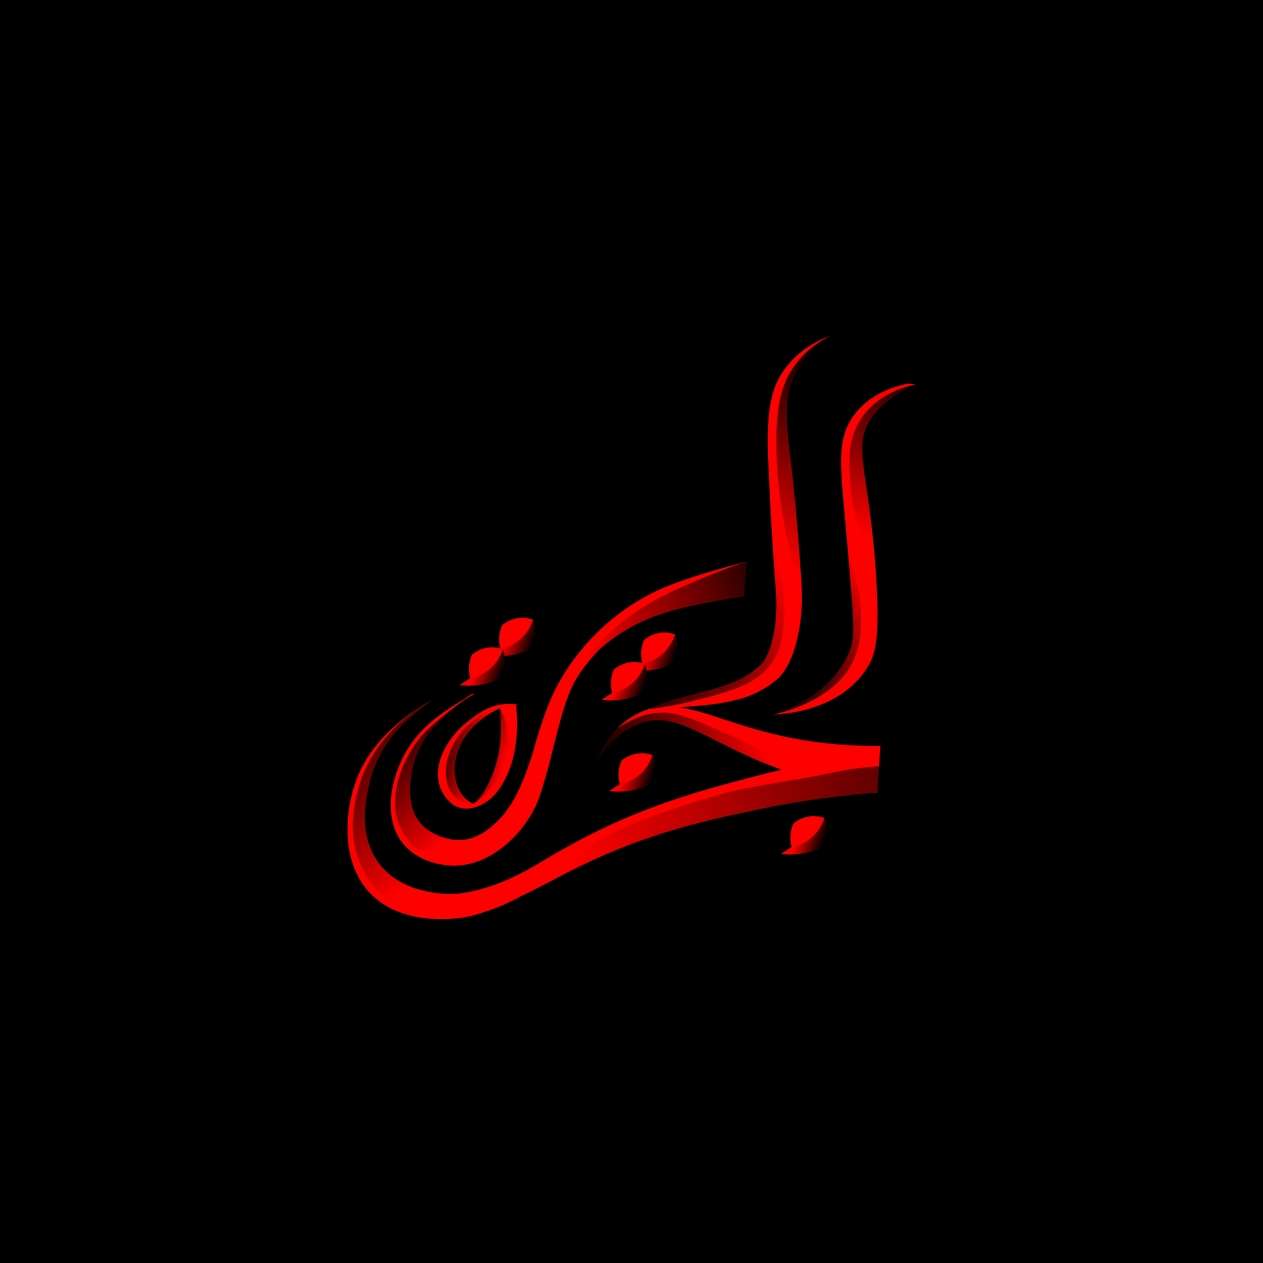 #arabic #calligraphy #logo #design